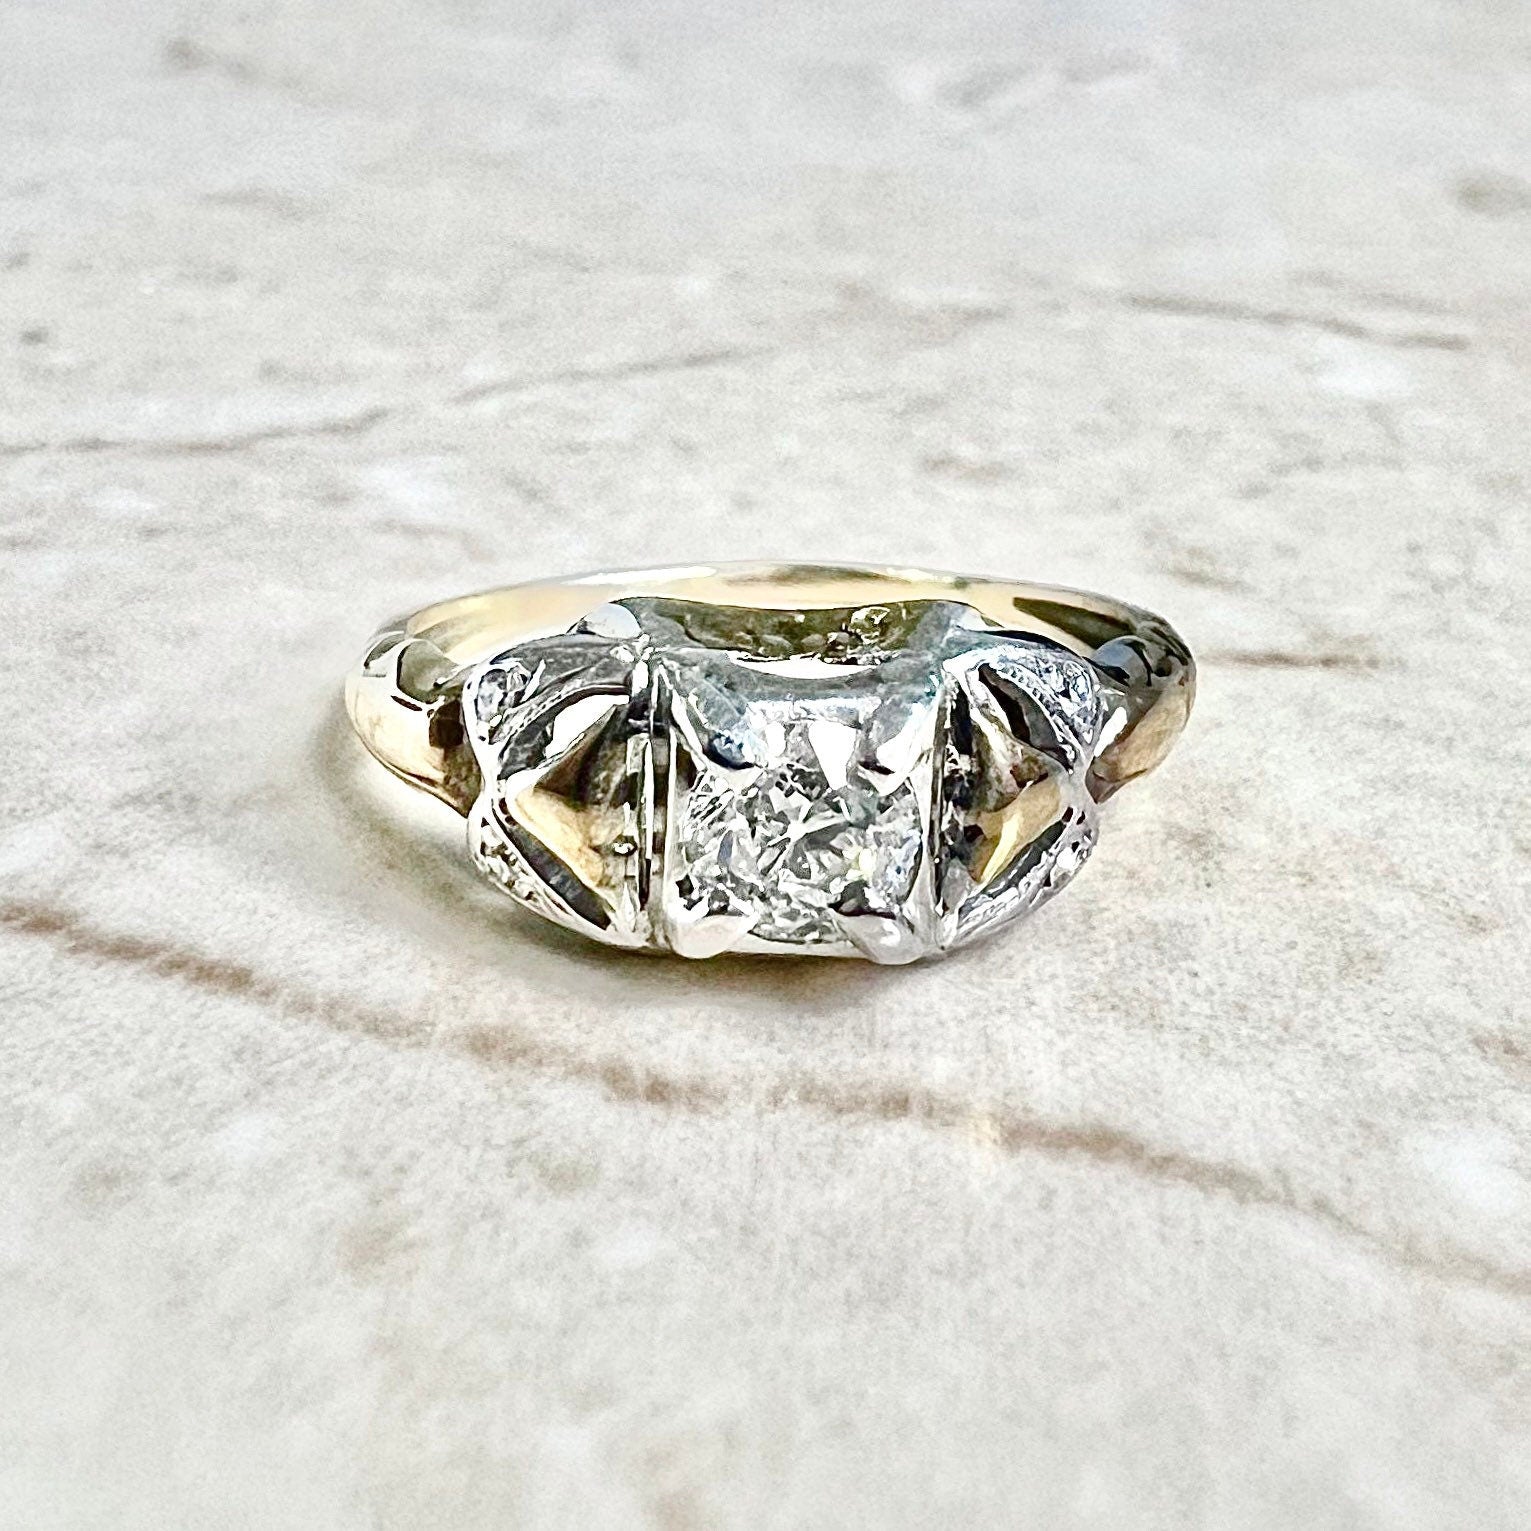 Vintage Art Deco Diamond Engagement Ring Circa 1935 - 14K Two Tone Gold - Vintage Solitaire - Diamond Wedding Ring - Diamond Promise Ring